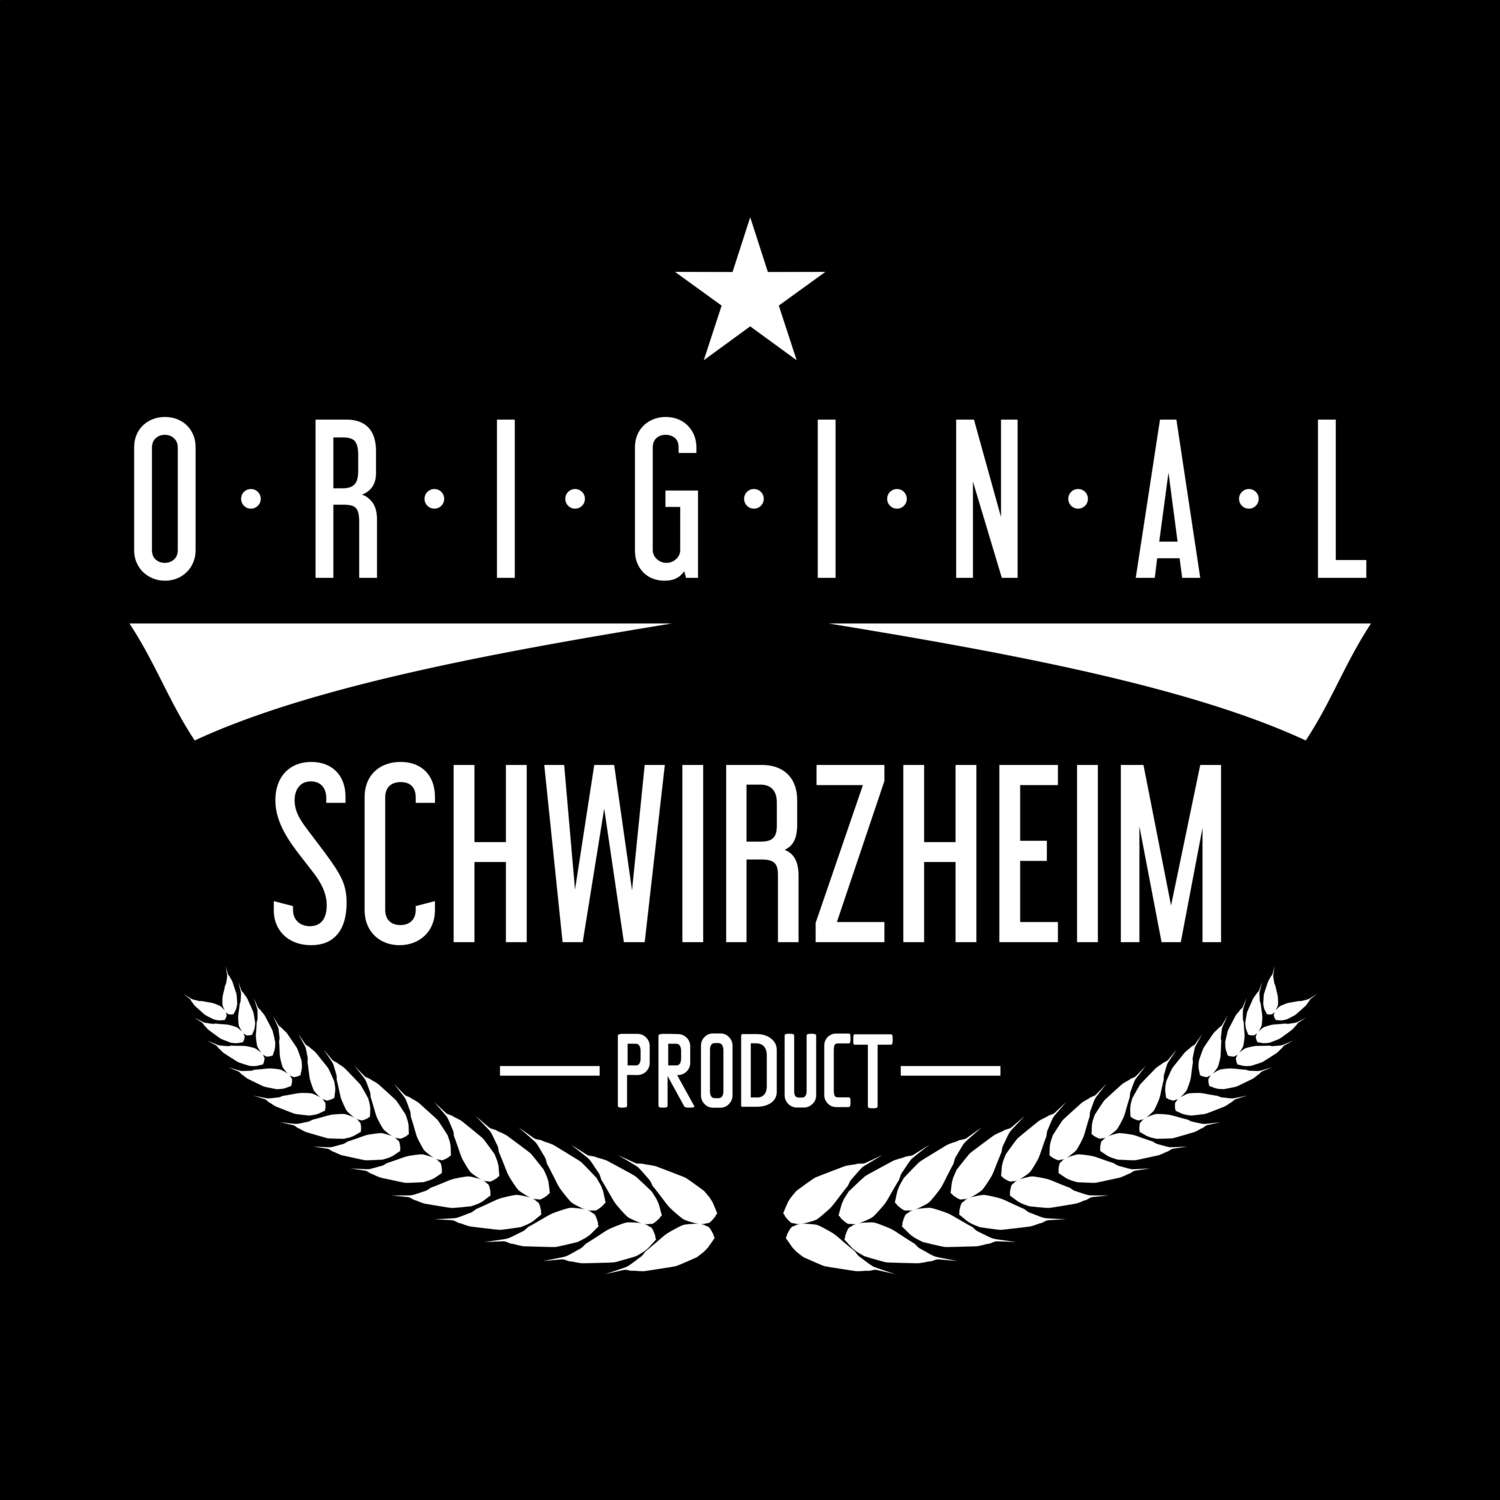 Schwirzheim T-Shirt »Original Product«